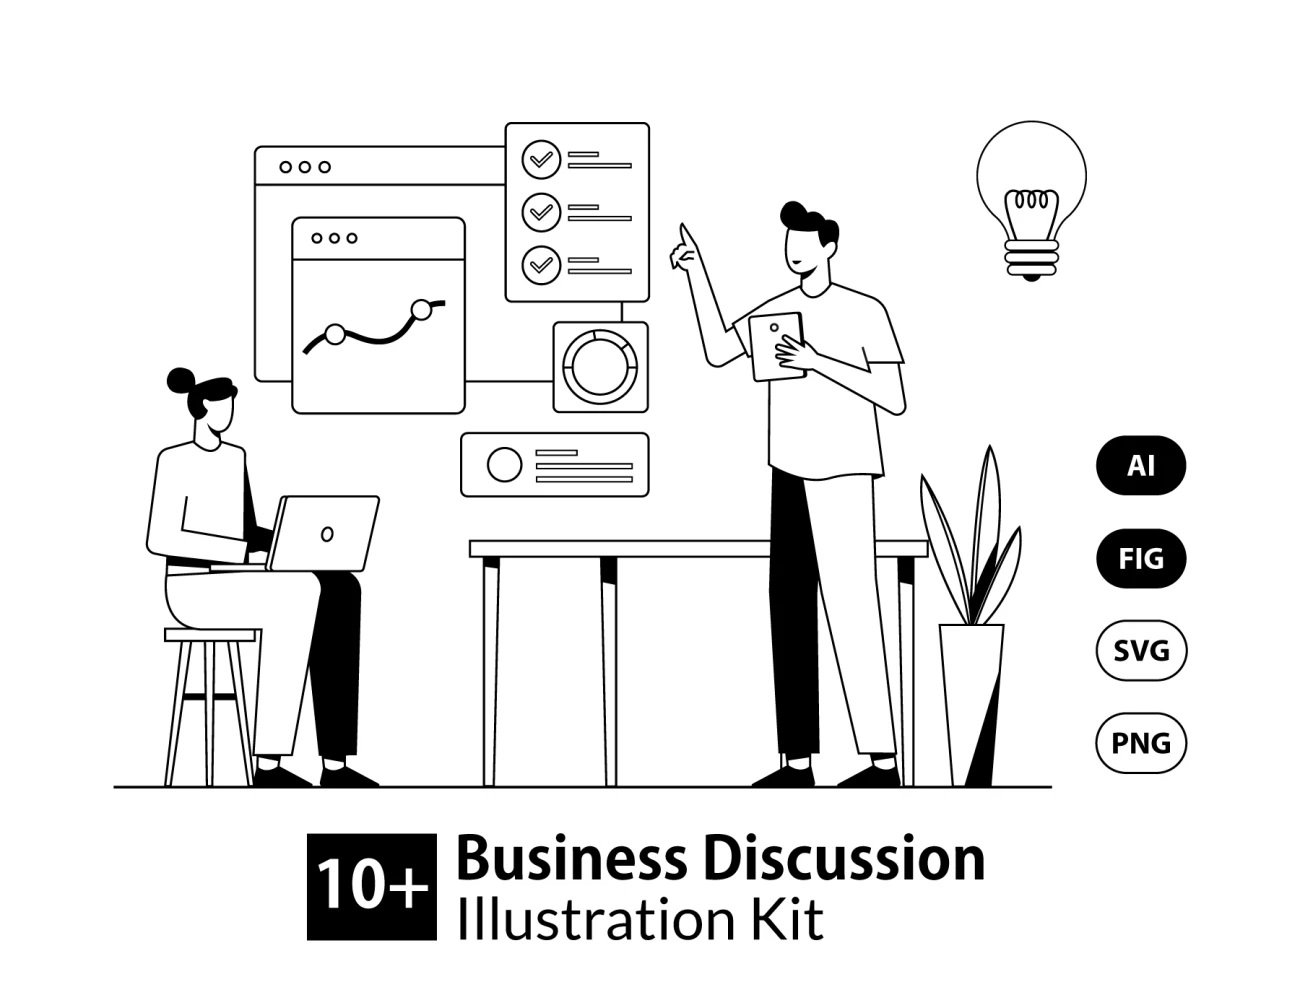 Business Discussion Illustration Kit 商业讨论手绘插图包-人物插画、商业金融、场景插画、学习生活、插画、插画功能、插画风格、数据演示、概念创意、线条手绘、职场办公、营销创业-到位啦UI